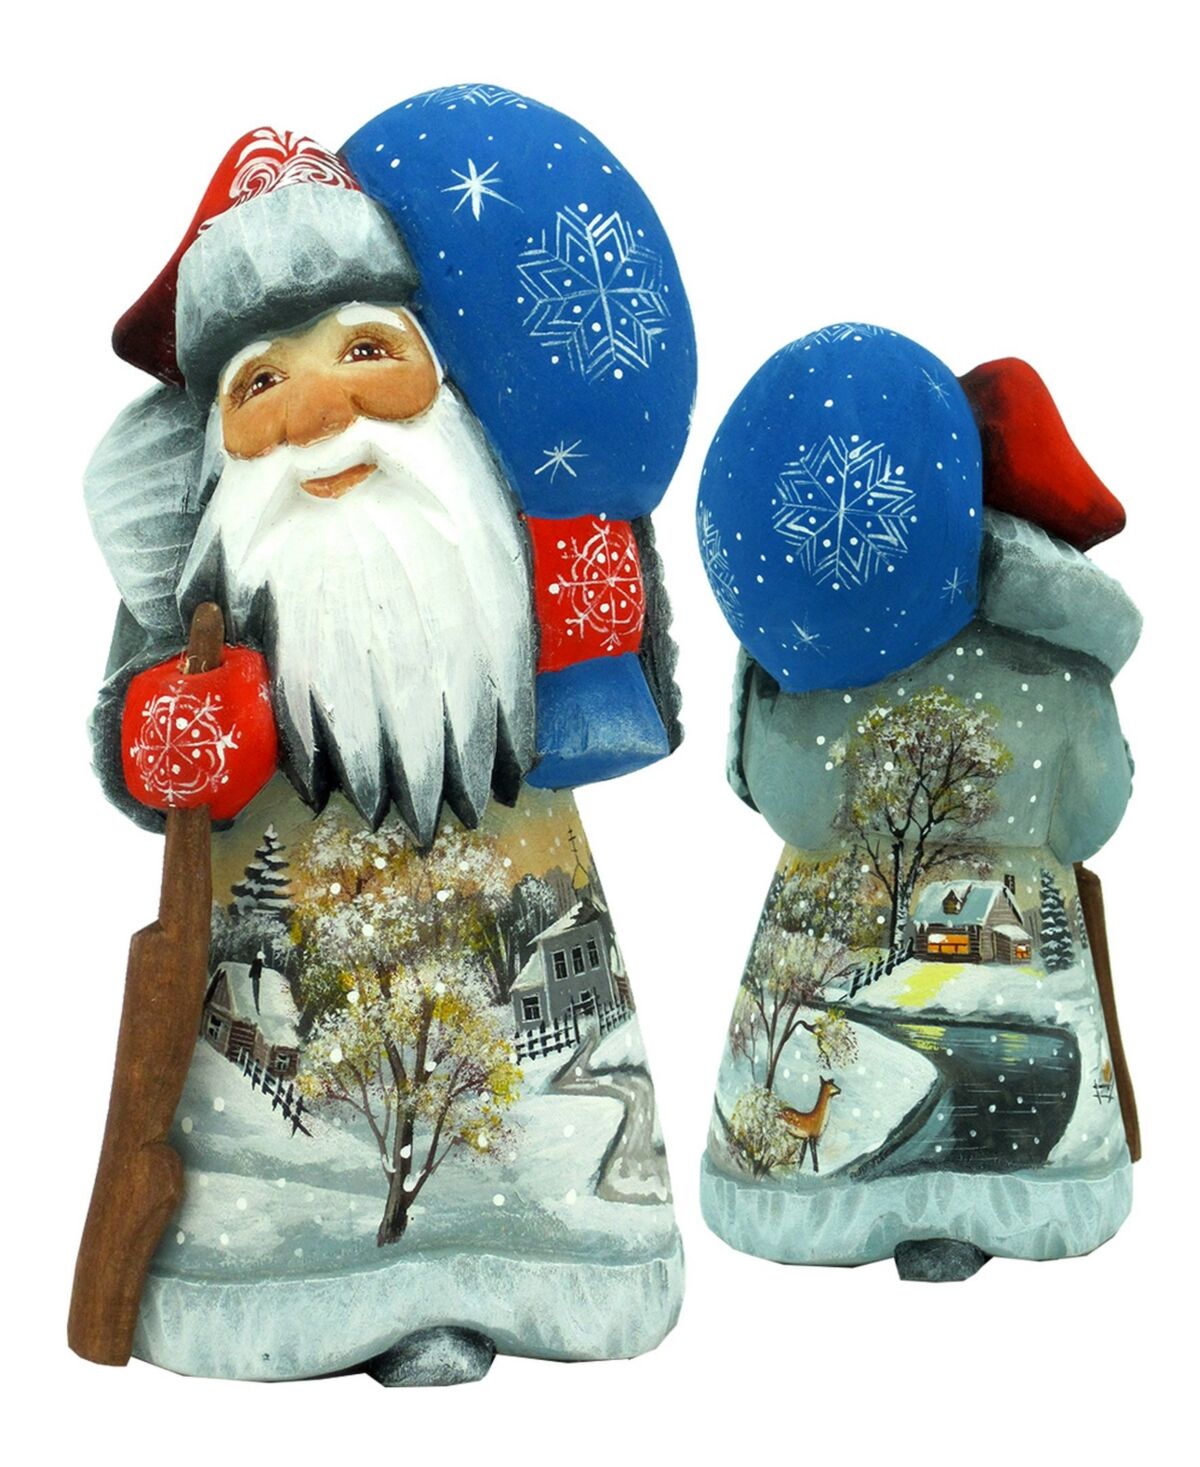 G.DeBrekht Woodcarved and Hand Painted Winter Landscape Santa Figurine - Multi